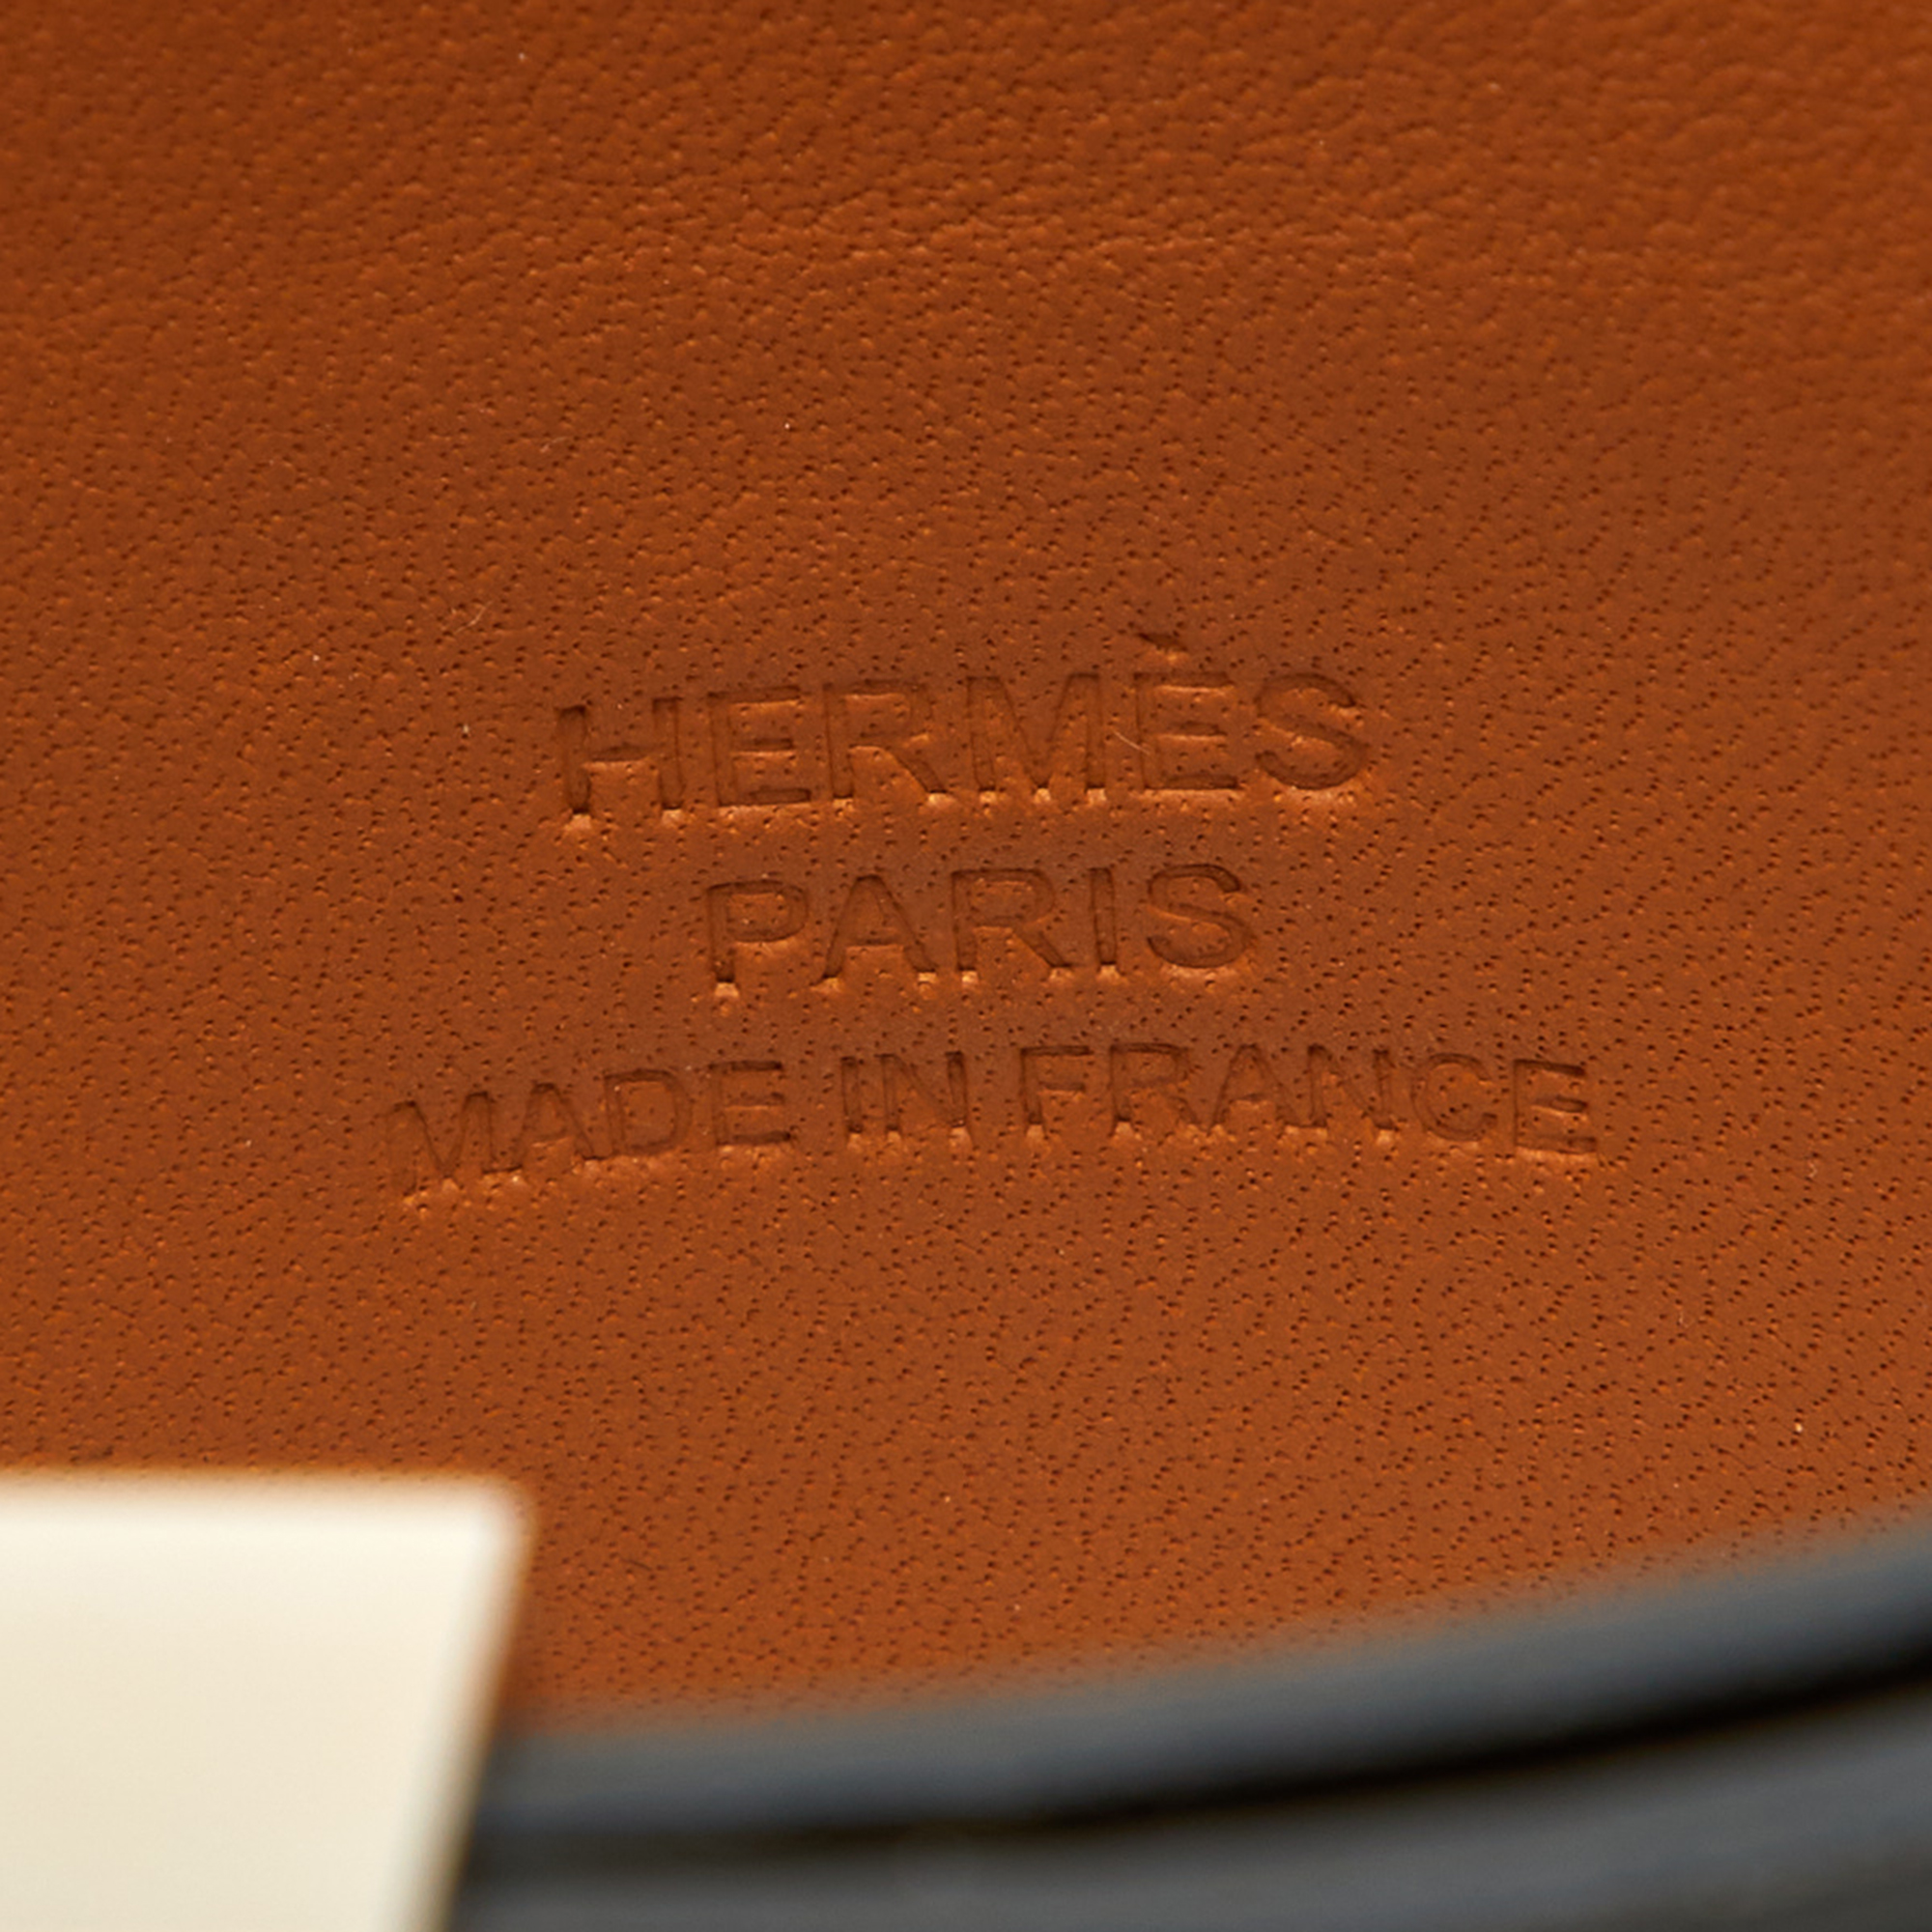 Hermes Collier De Chien Black Leather Palladium Plated Wide Cuff Bracelet S